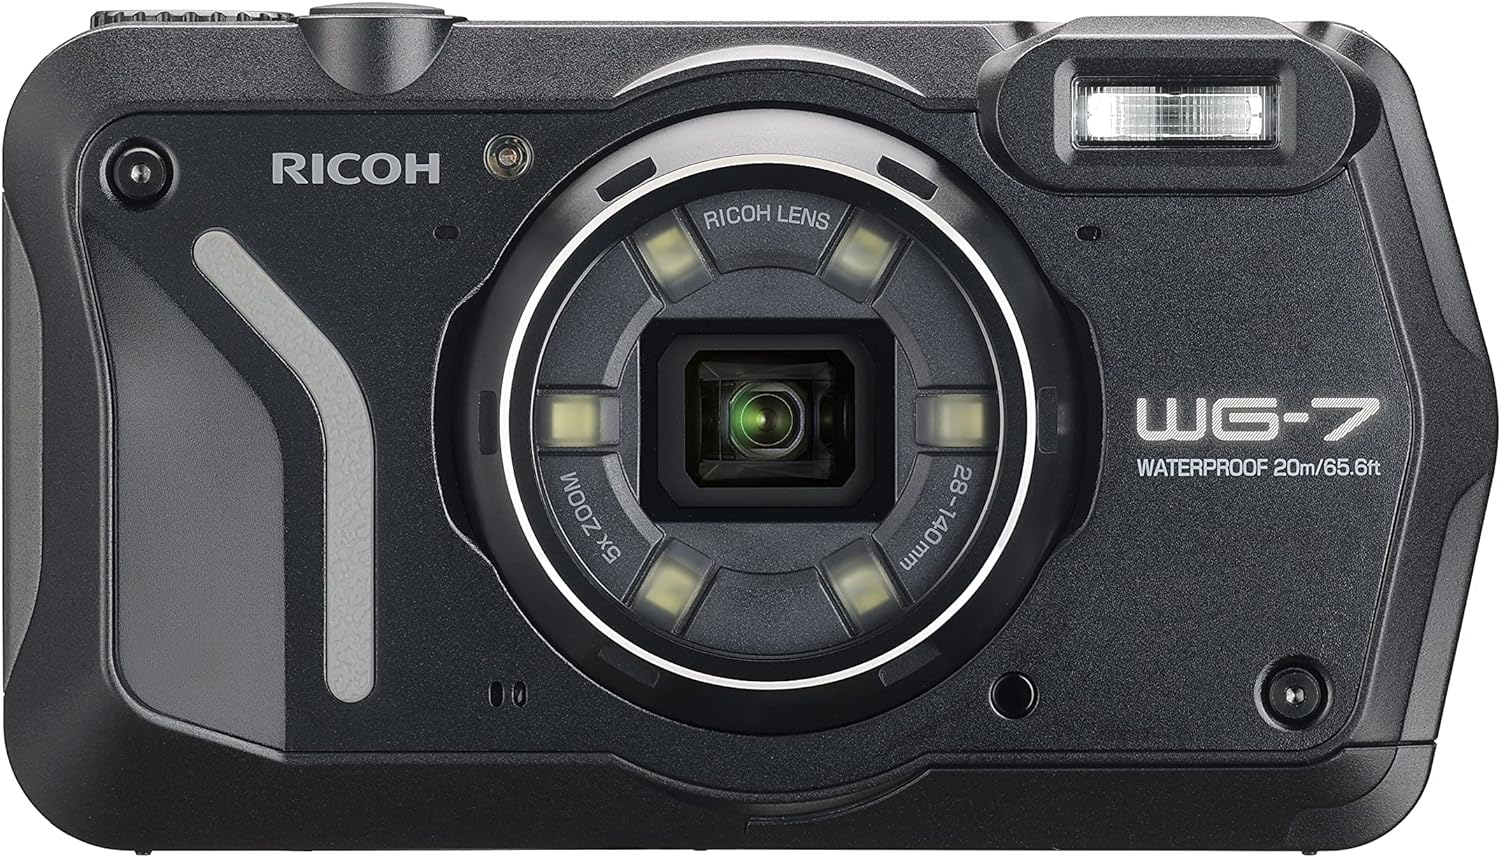 RICOH WG-7 Digital Camera Tough Waterproof Dustproof 4K WEB Camera (Black)